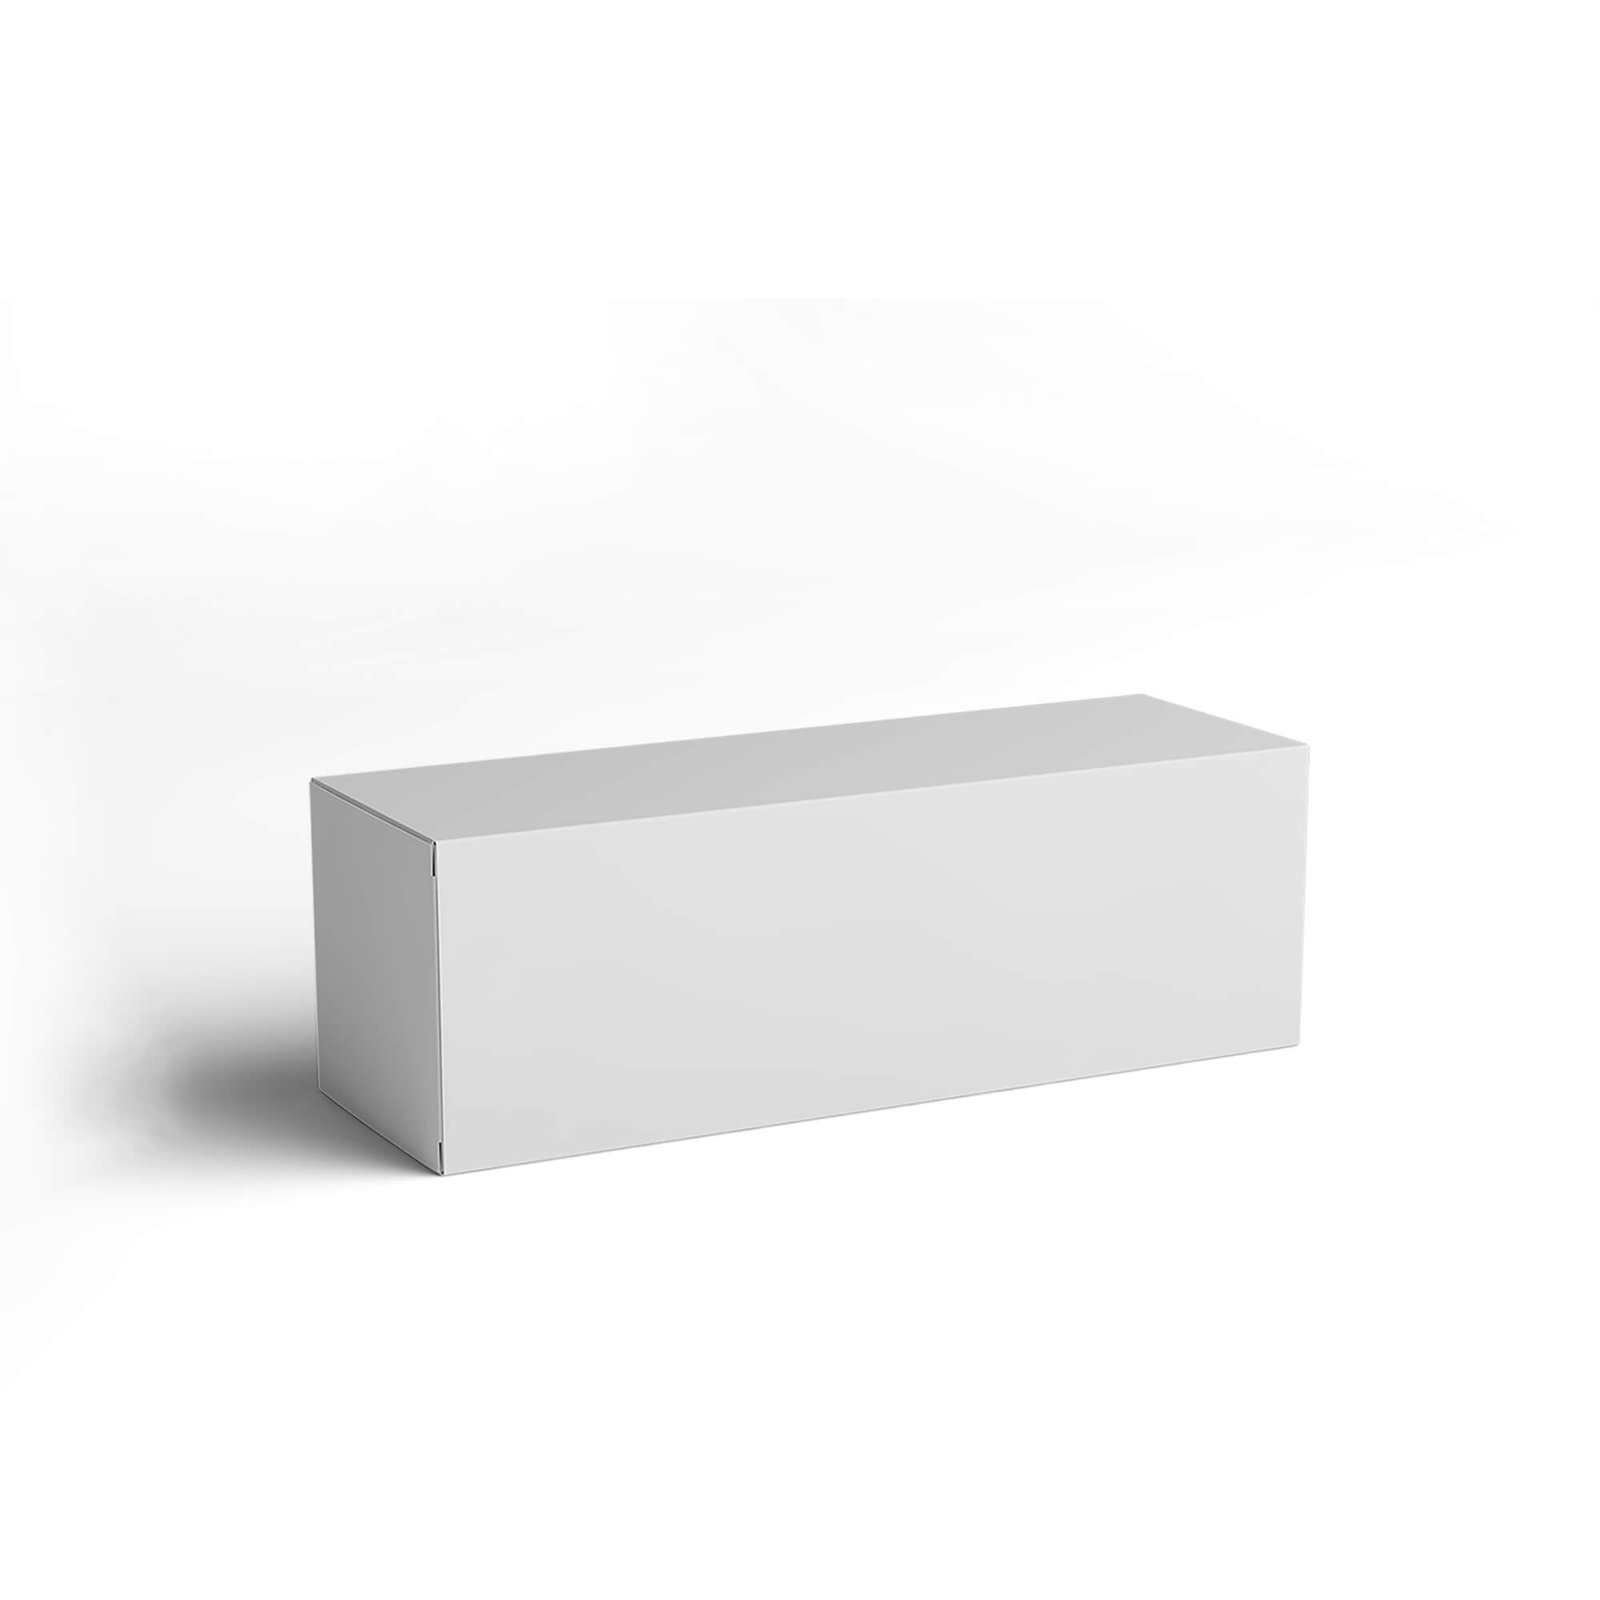 Blank Free Vertical Box Mockup PSD Template